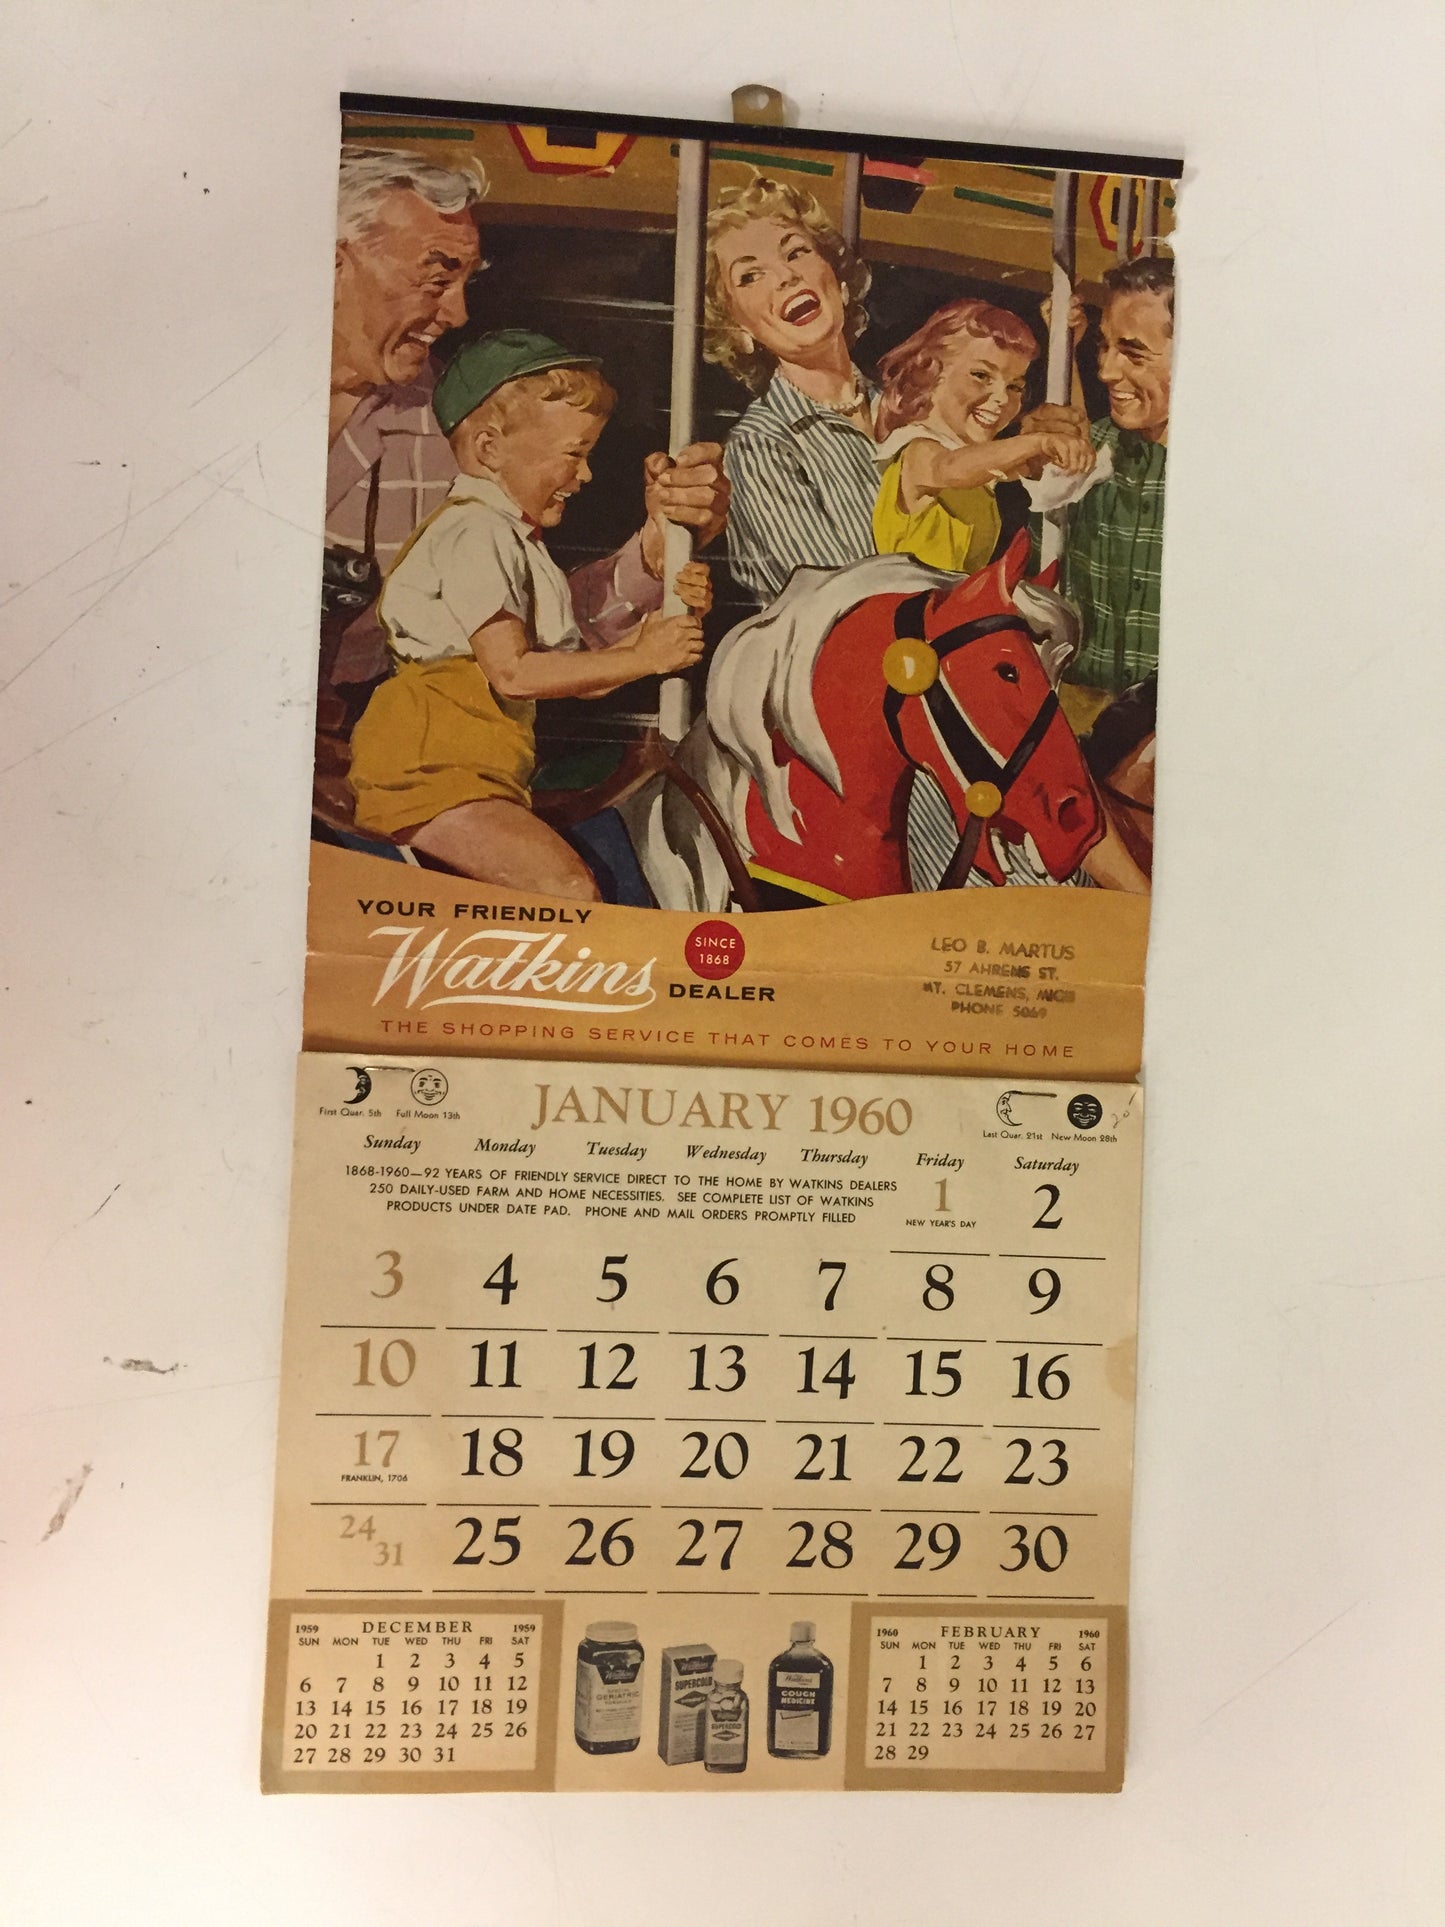 Vintage 1960 WATKINS Products Advertising Calendar Mt. Clemens Michigan.